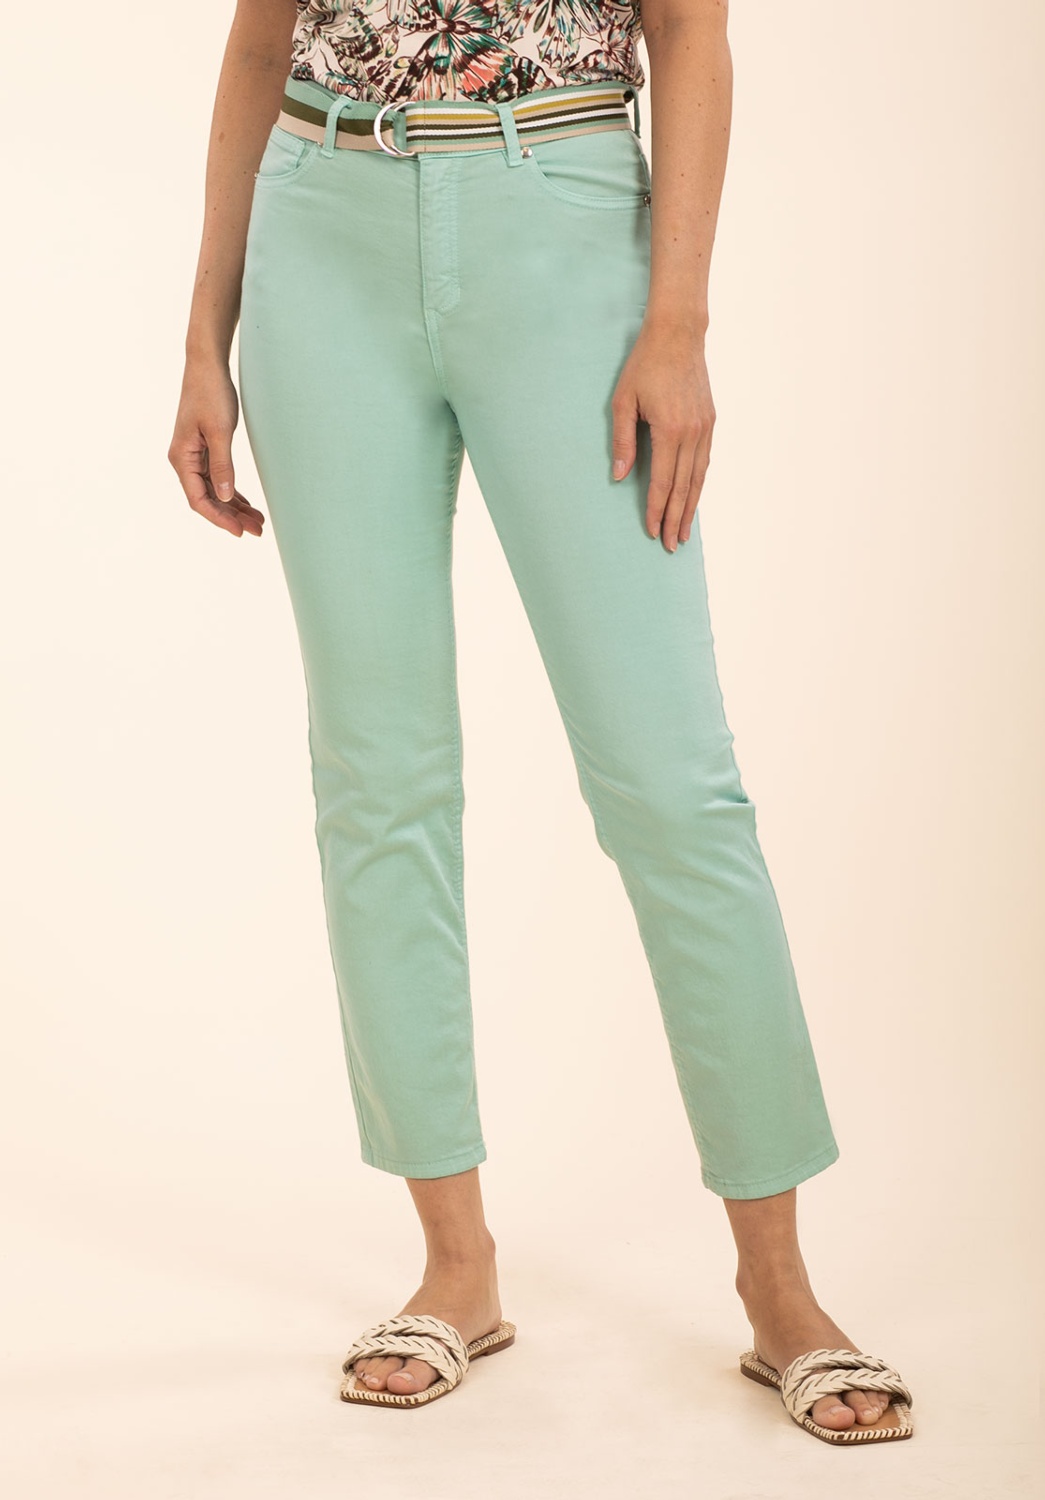 Pantalon turquoise 1